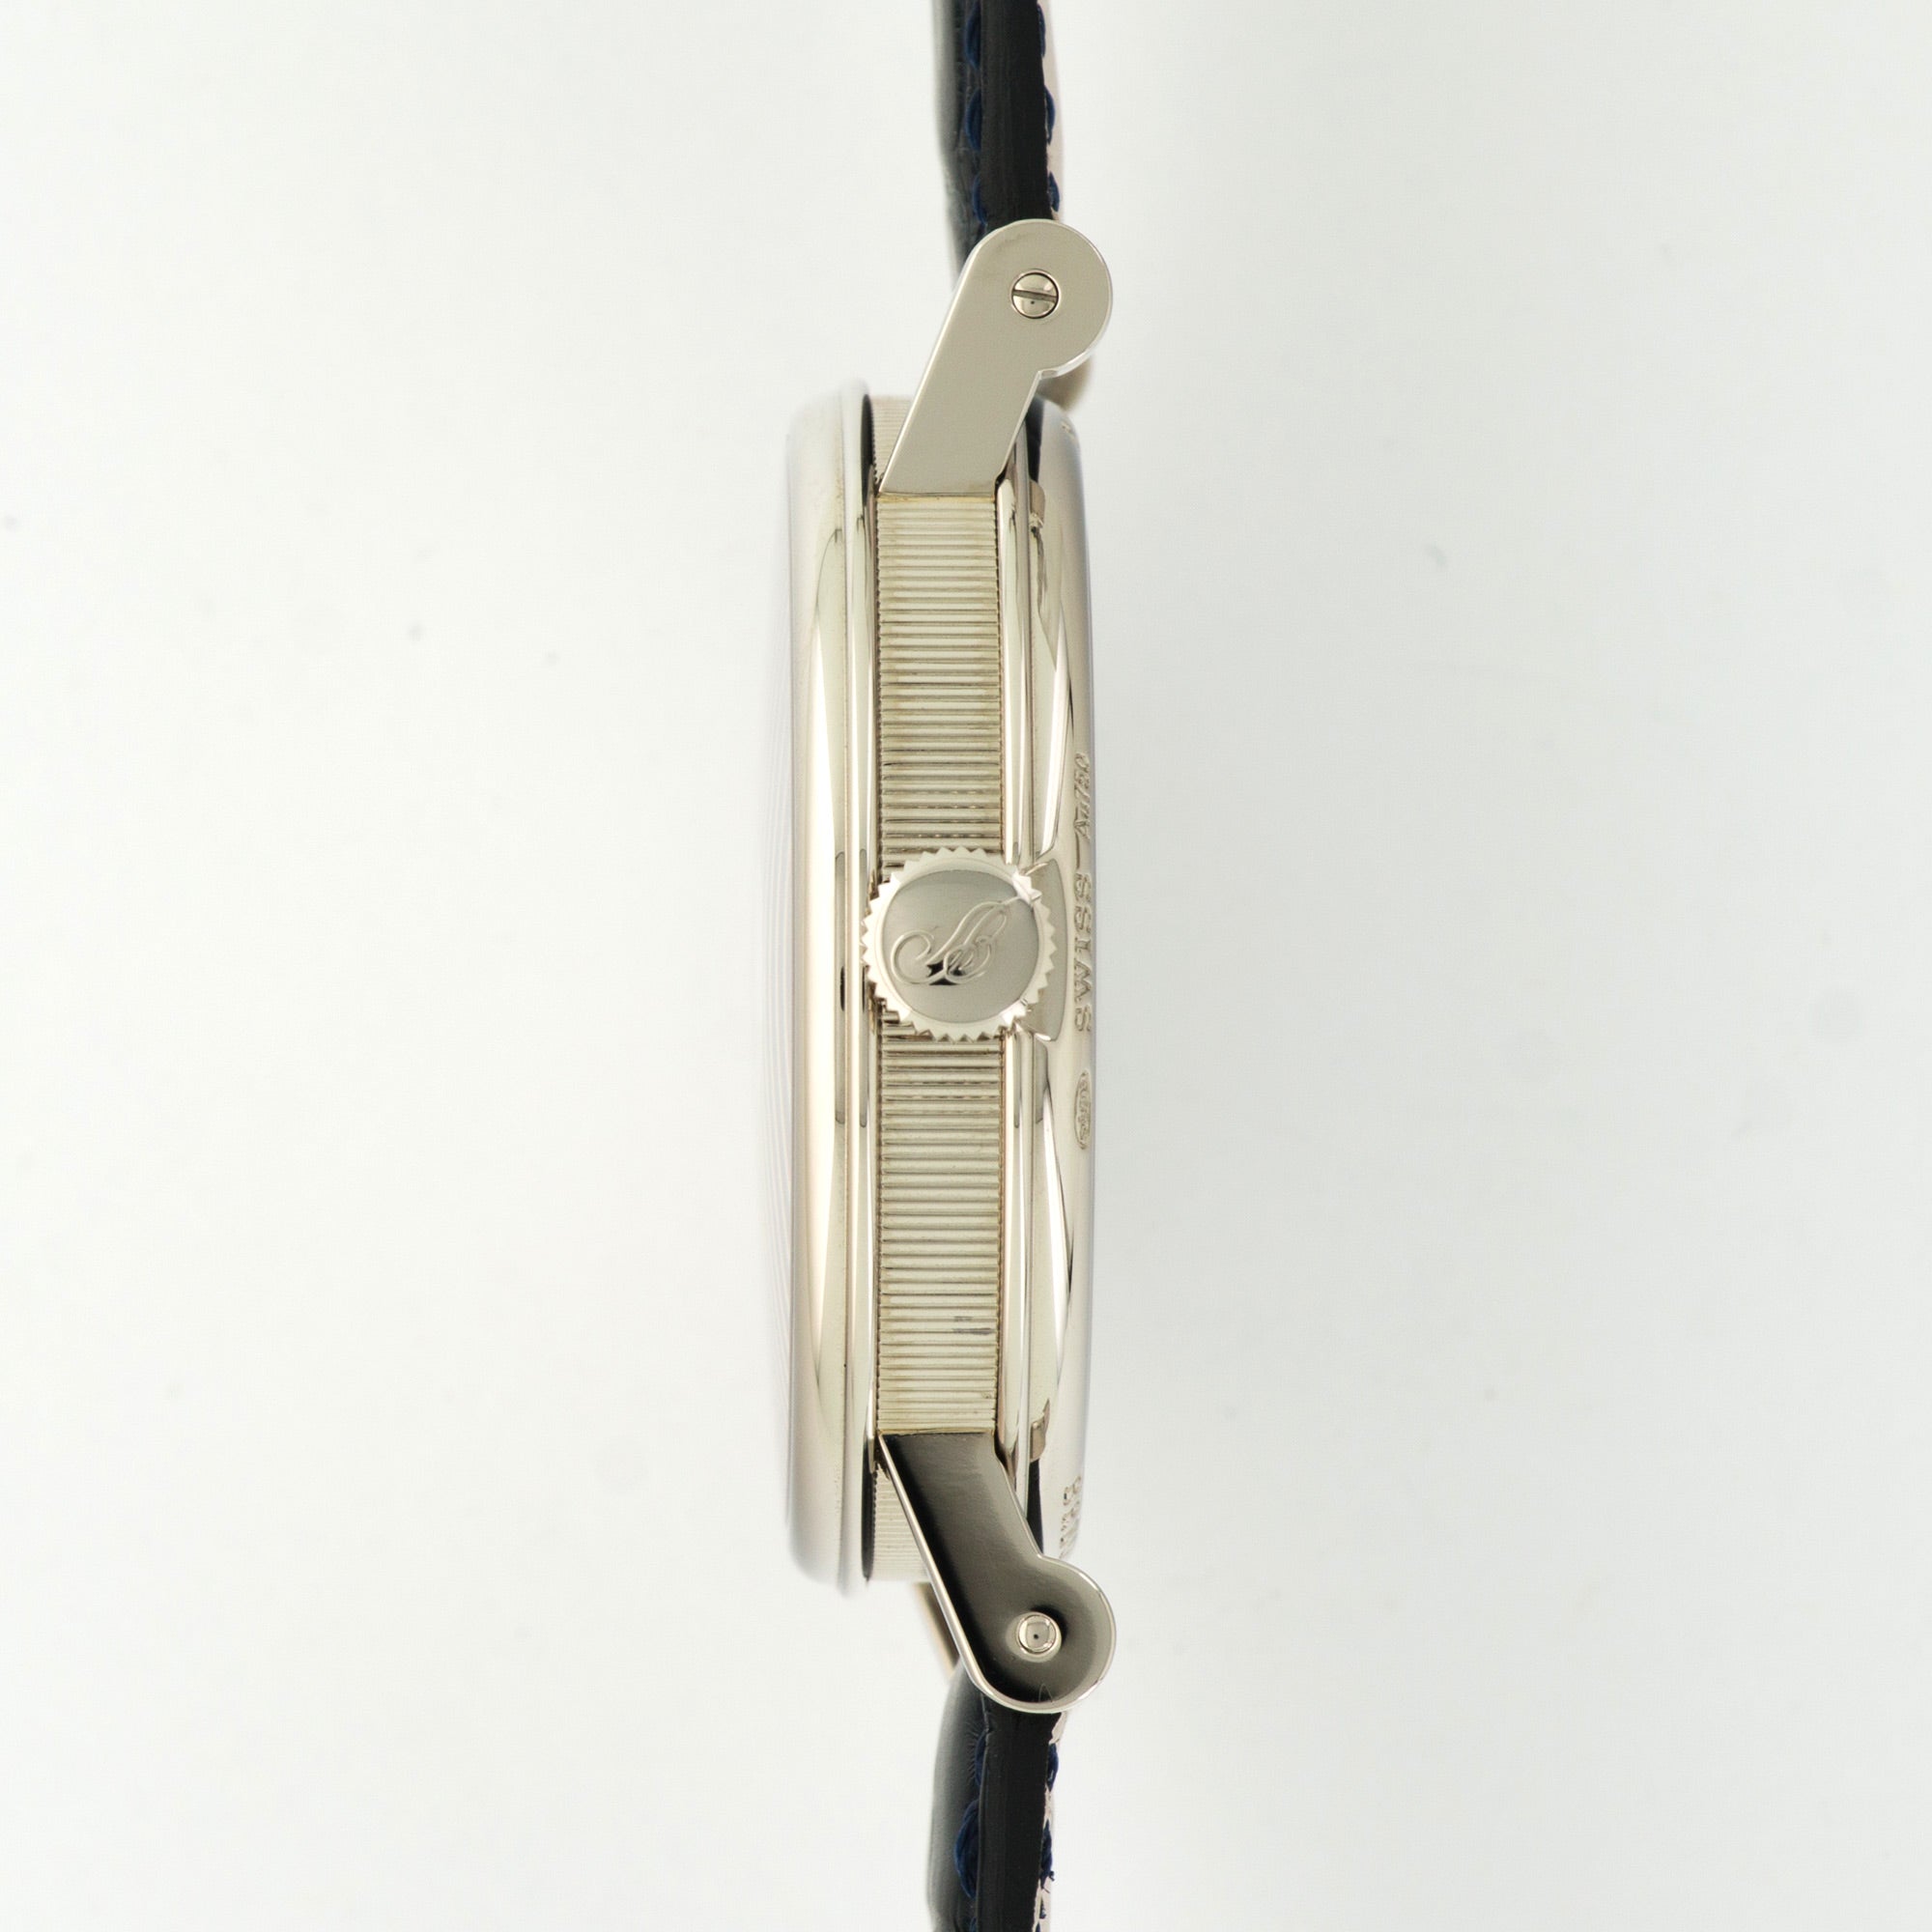 Breguet - Breguet White Gold Tradition Skeleton Watch Ref. 7057 - The Keystone Watches